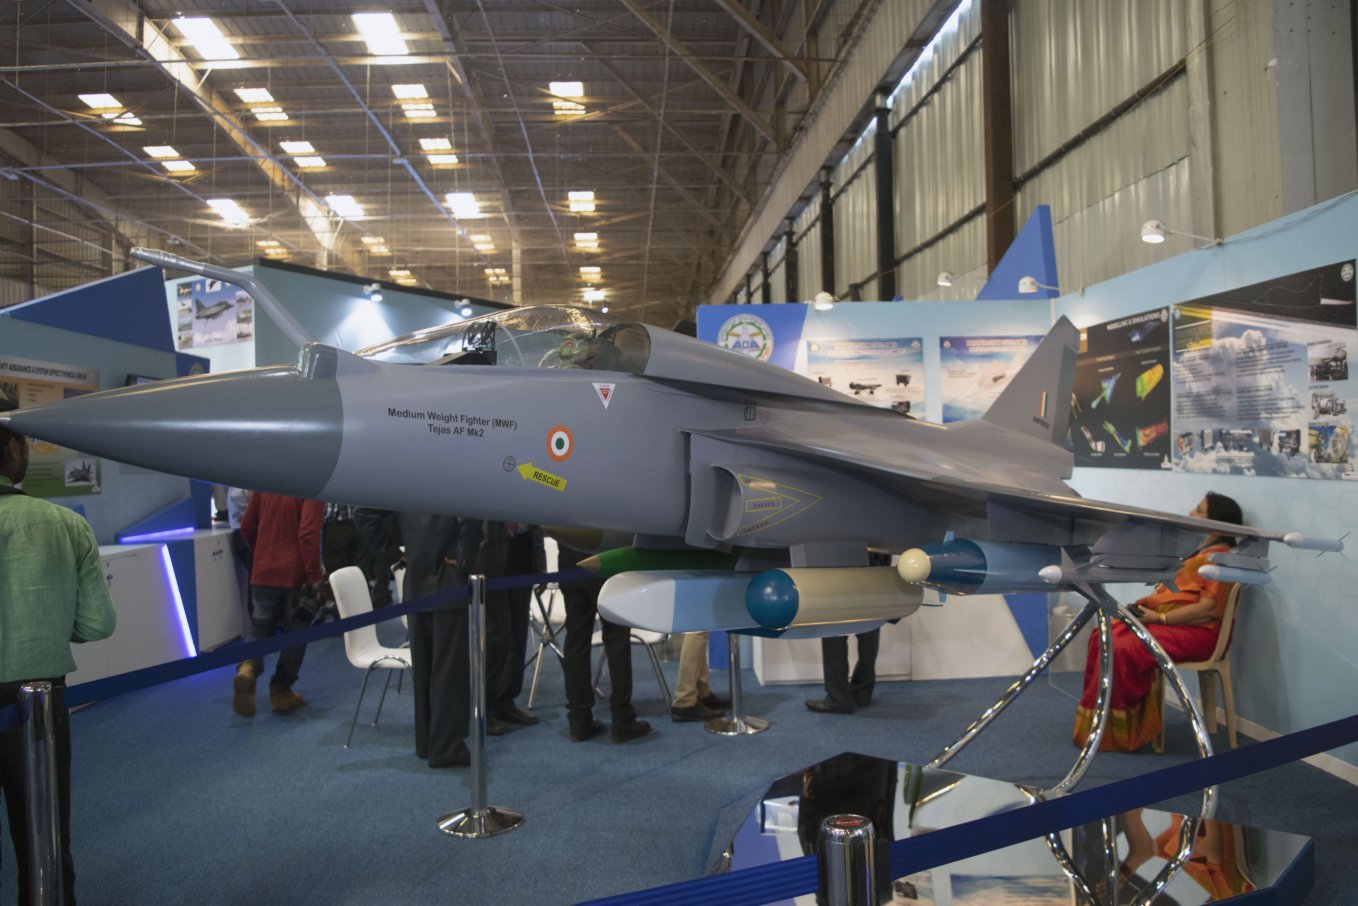 A model of the HAL Tejas Mk 2 Medium Weight Fighter (MWF) showcased at Aero India 2019. (IHS Markit/Caron Natasha Tauro)